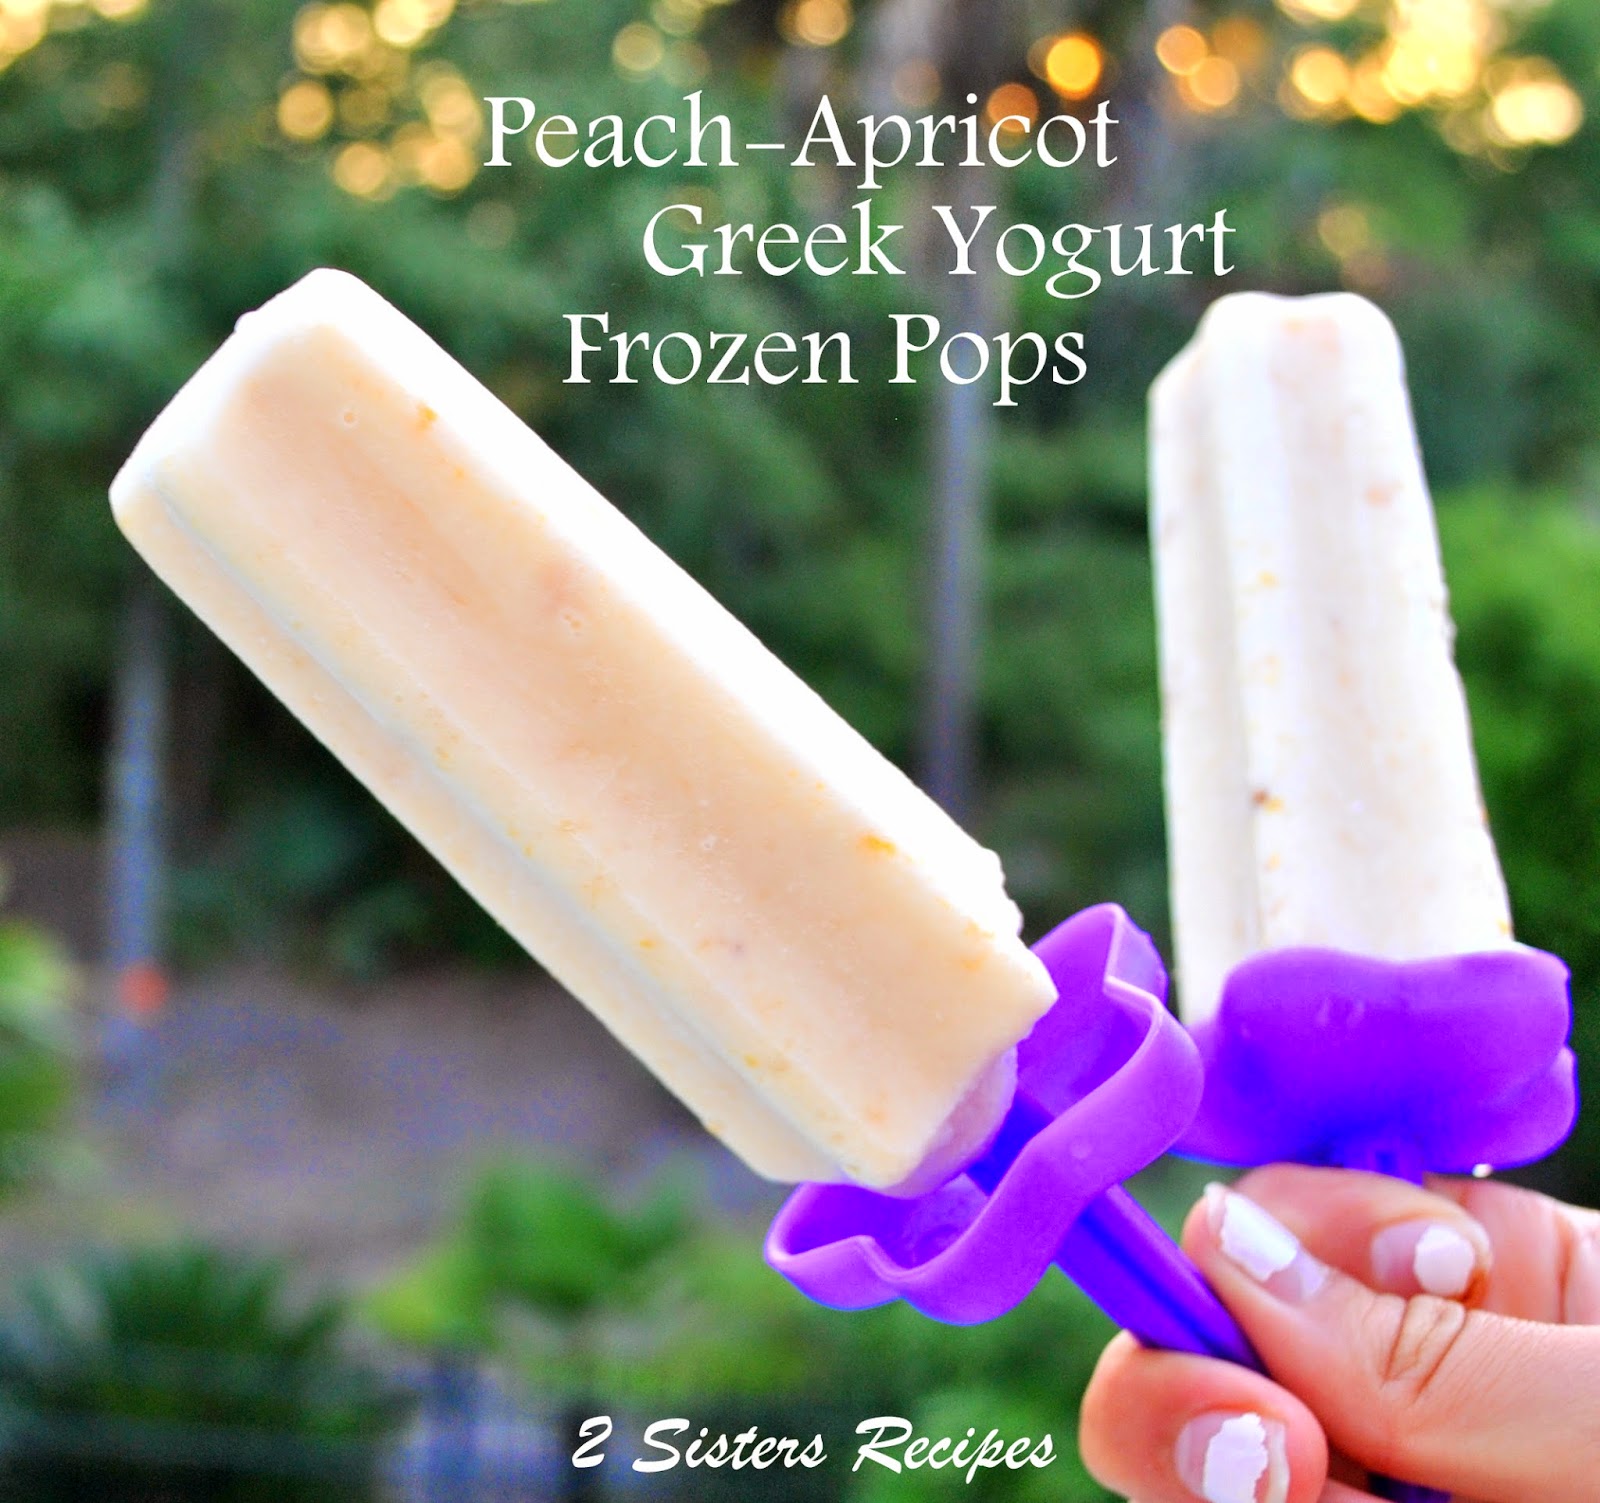 Peach-Apricot Greek Yogurt Frozen Pops by 2sistersrecipes.com